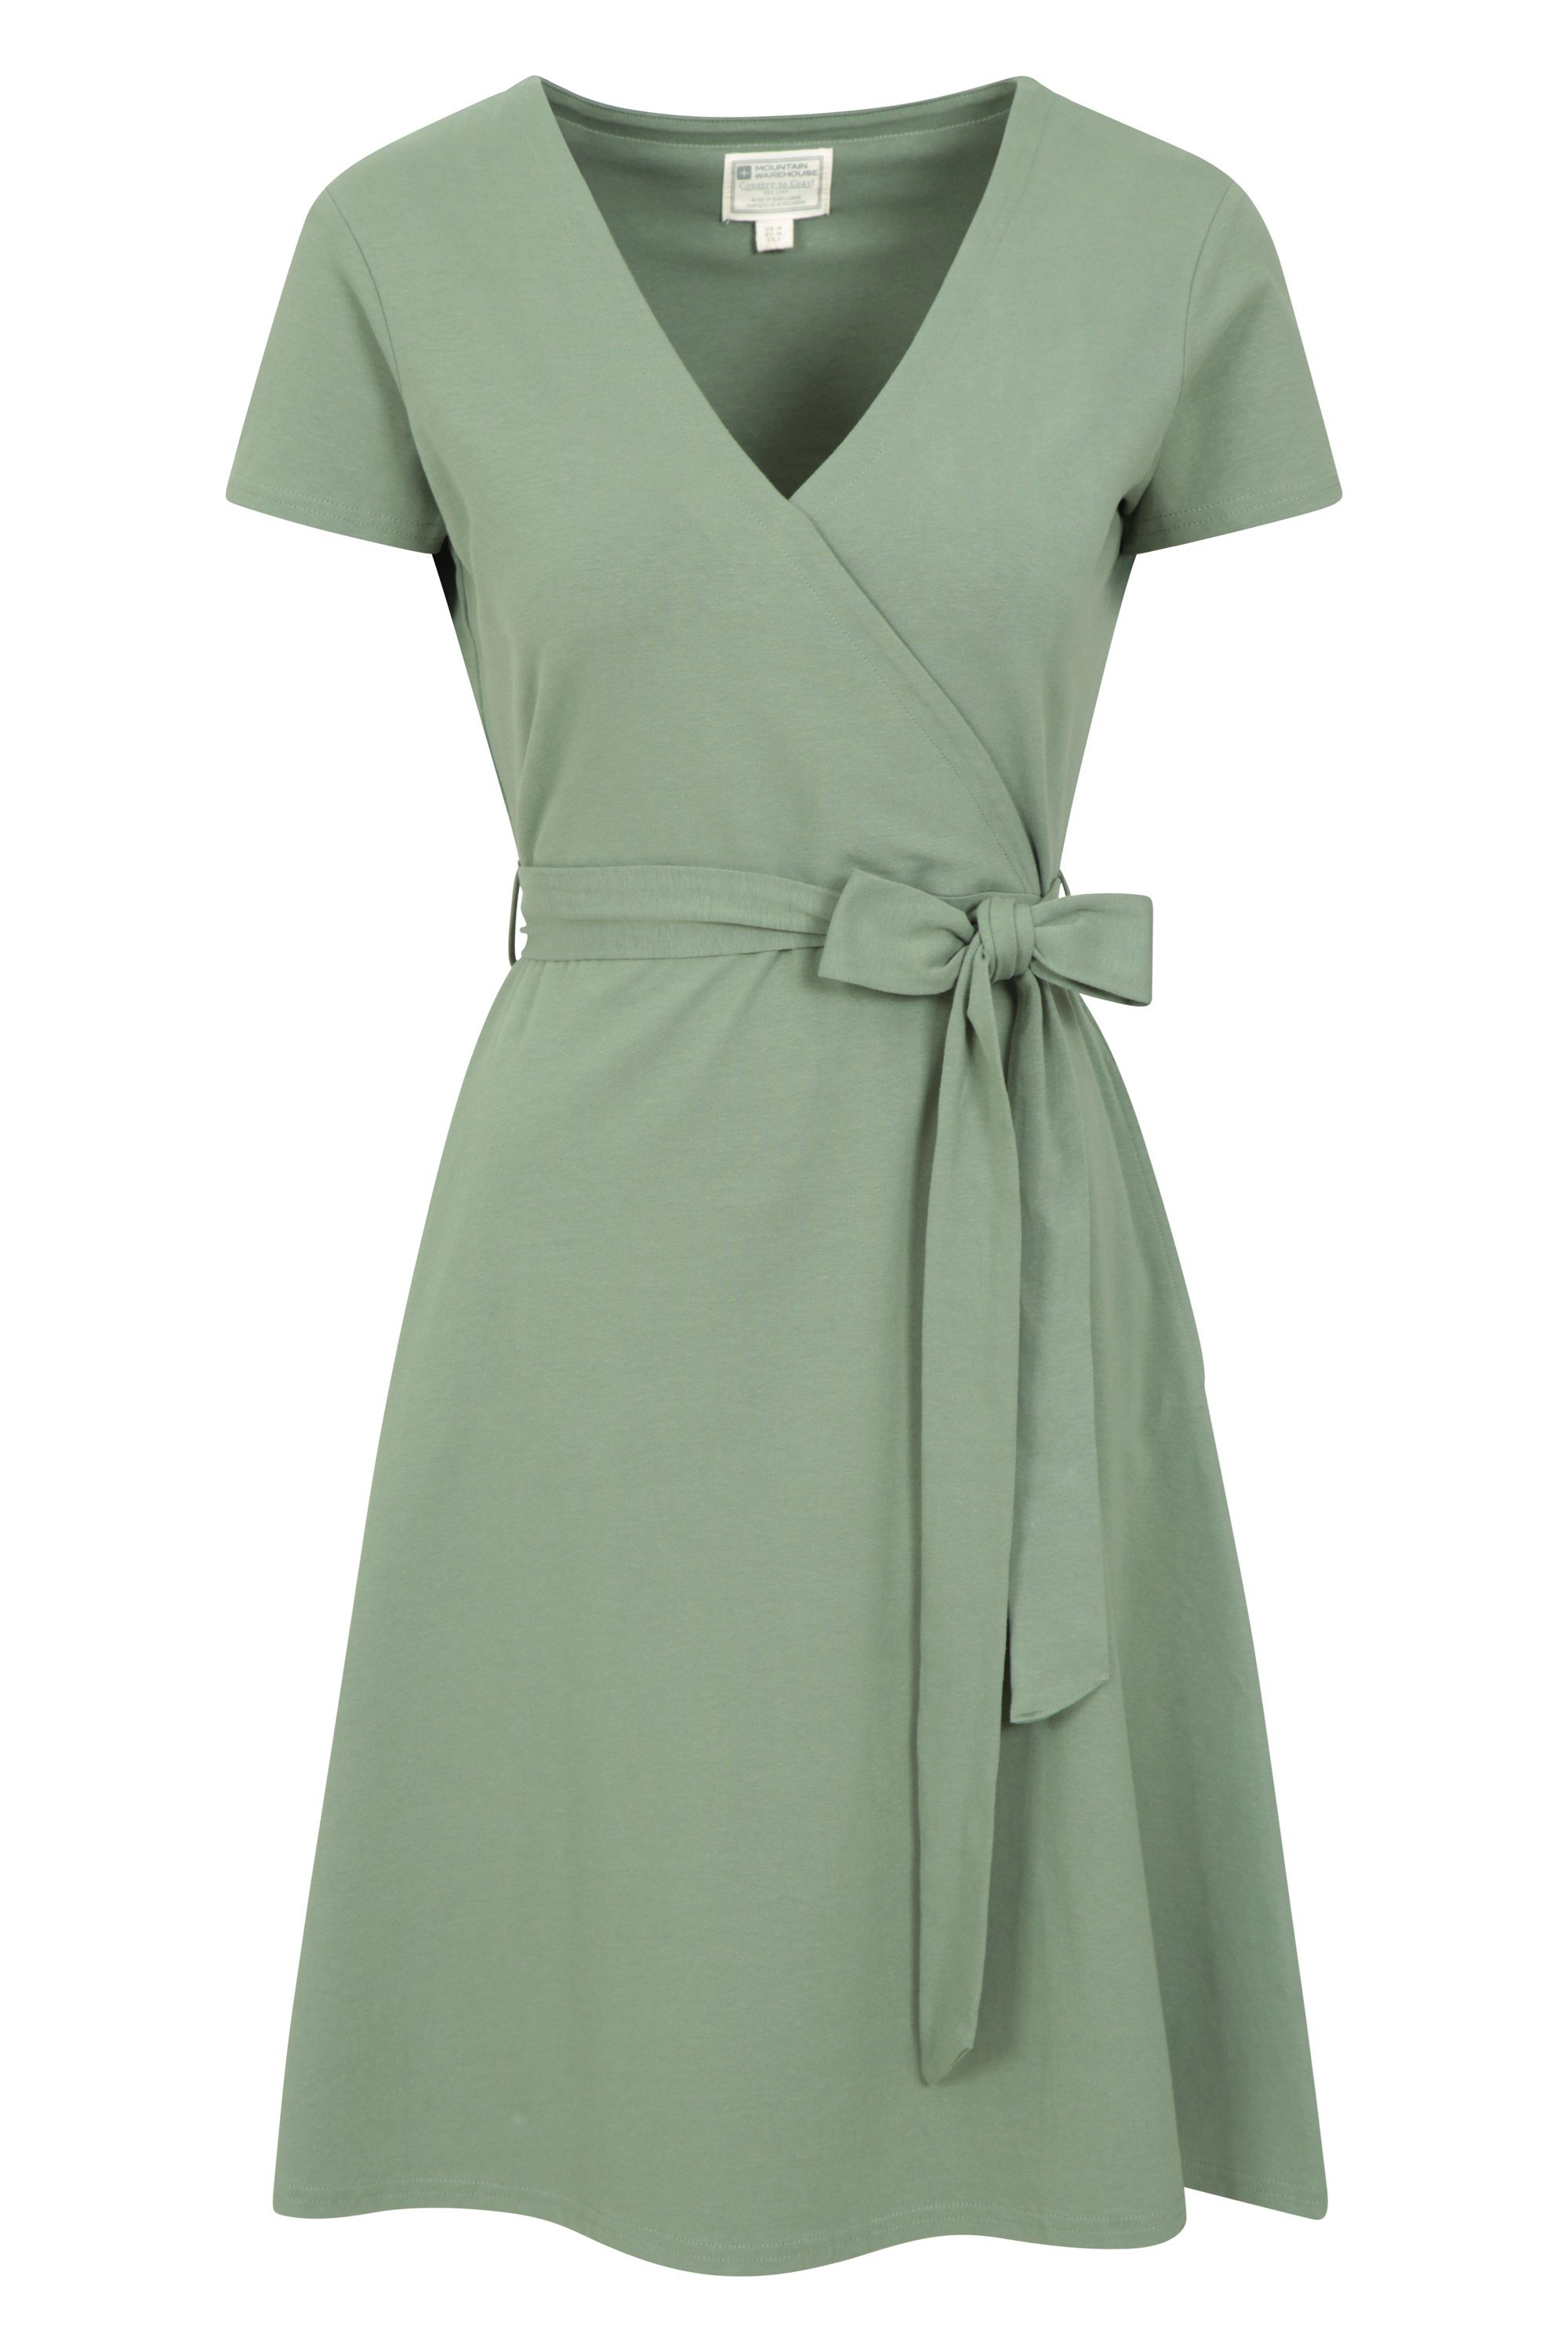 Santorini Womens Jersey Wrap Dress - Green